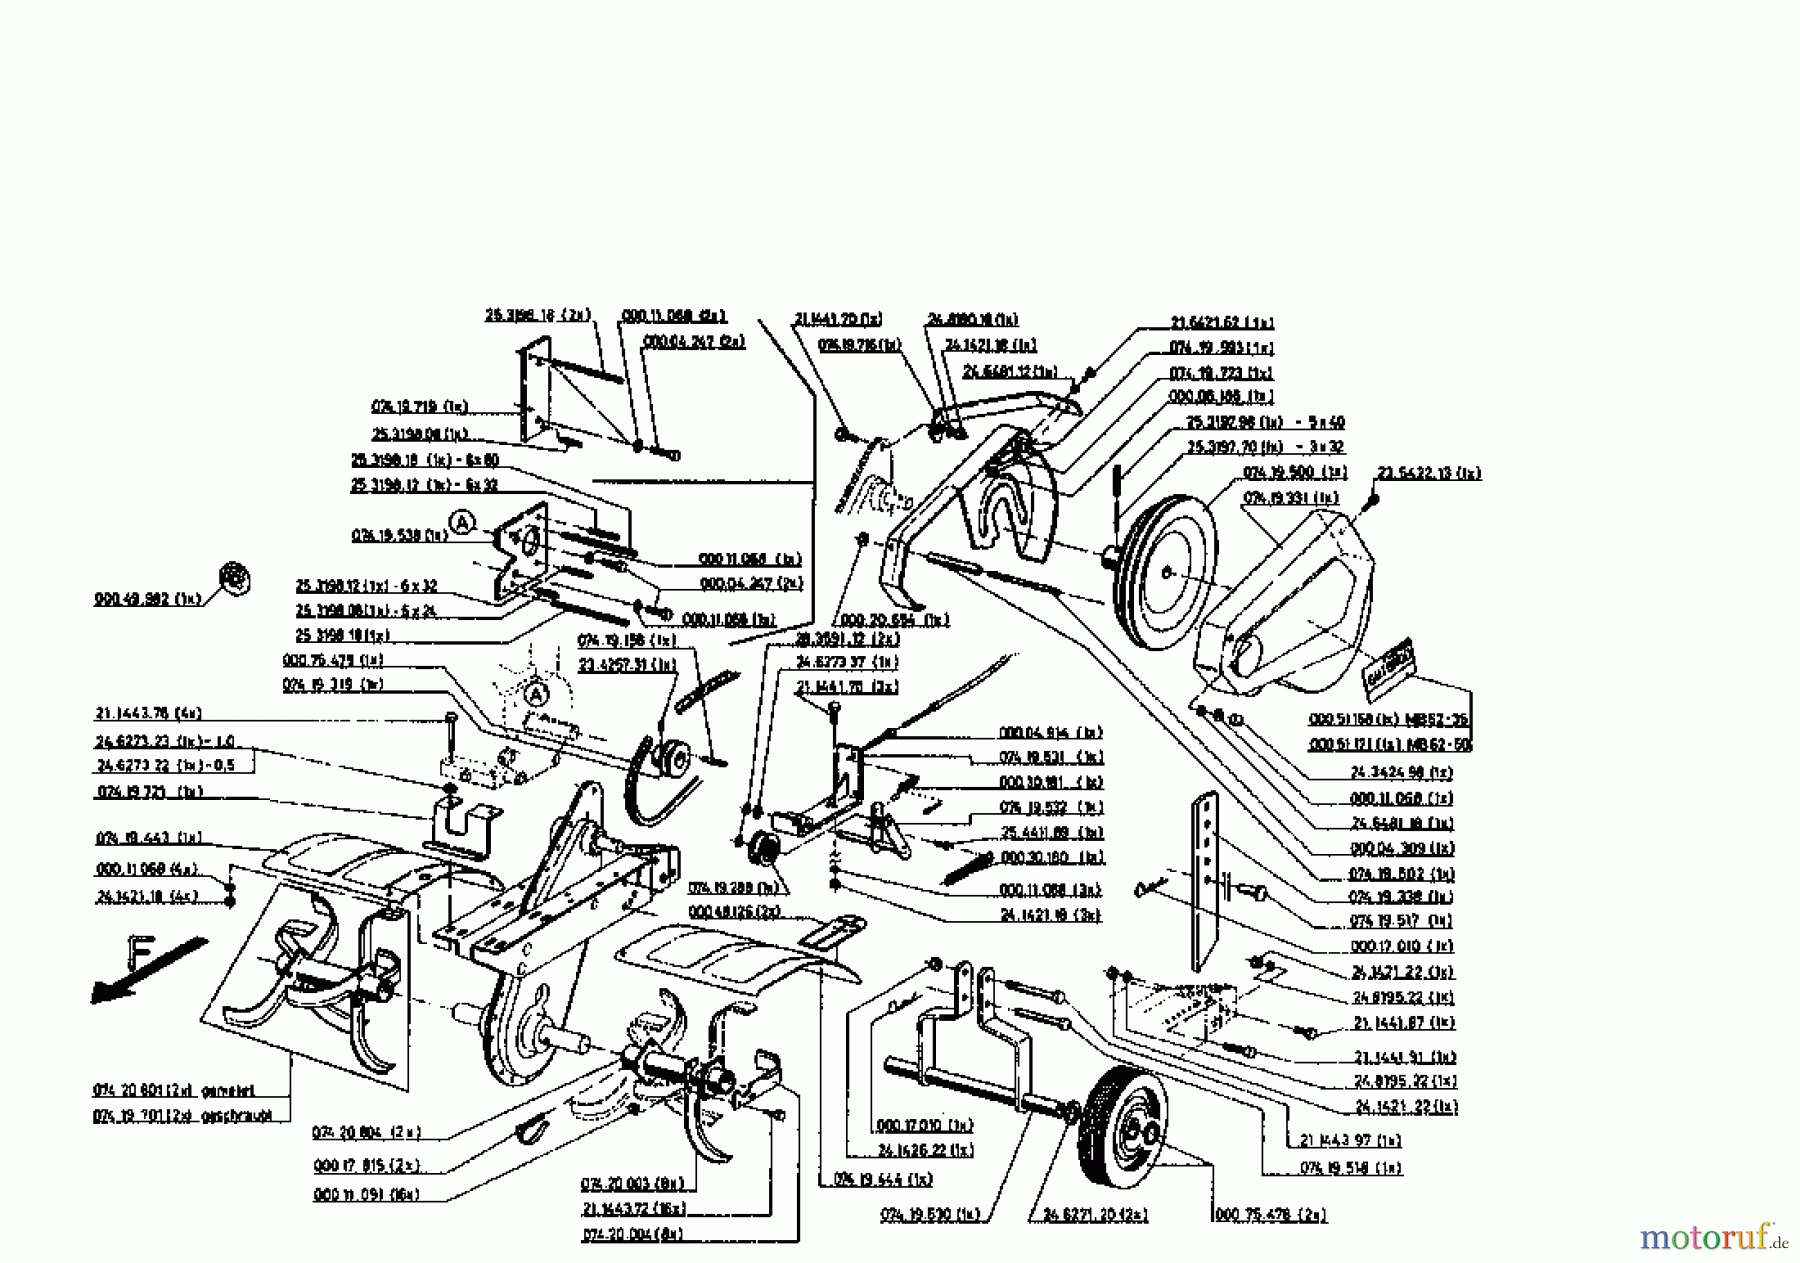  Gutbrod Motobineuse MB 62-50 07518.04  (1995) Machine de base